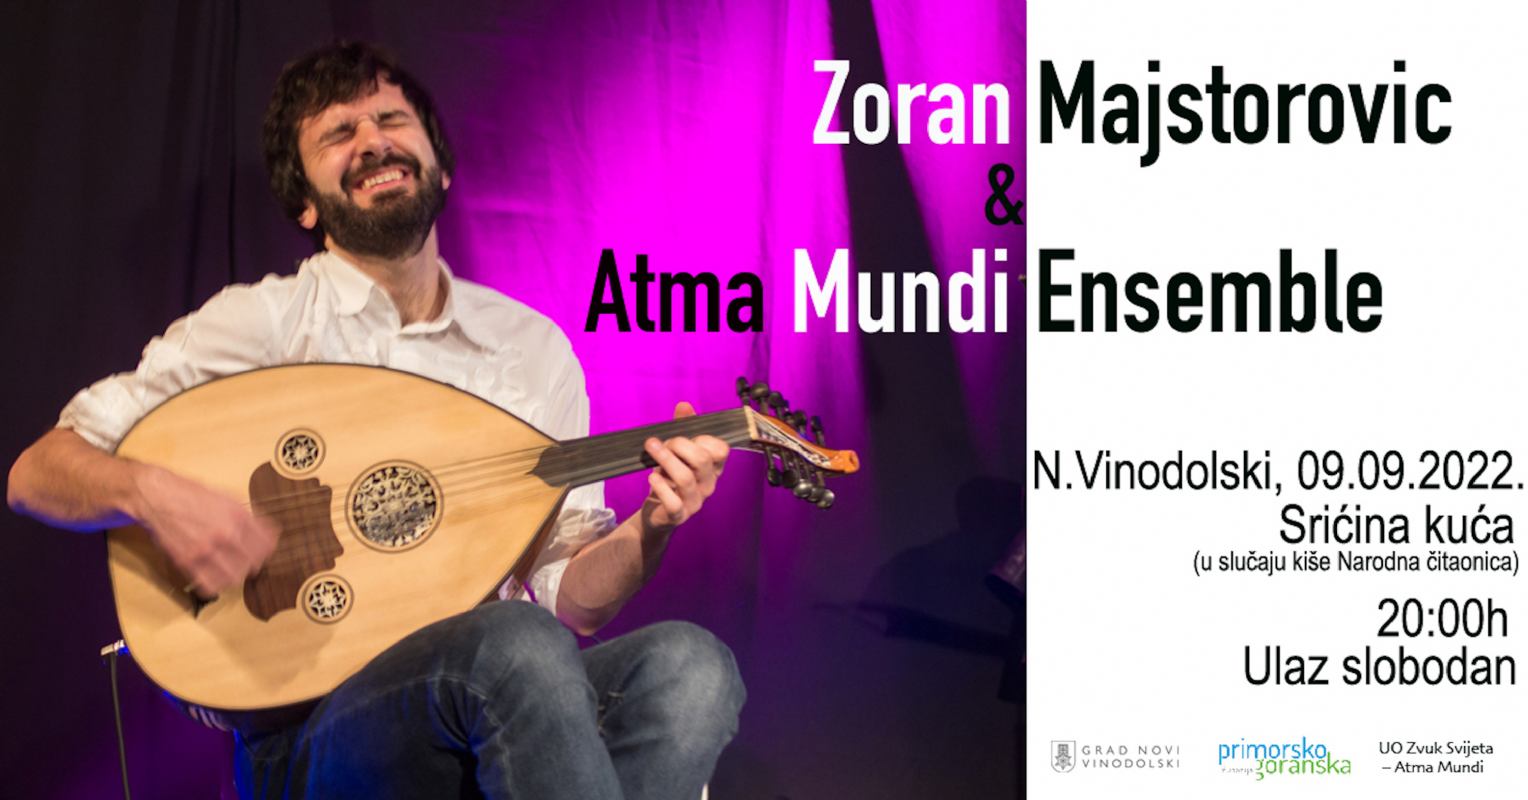 Zoran Majstorovic & Atma Mundi Ensemble